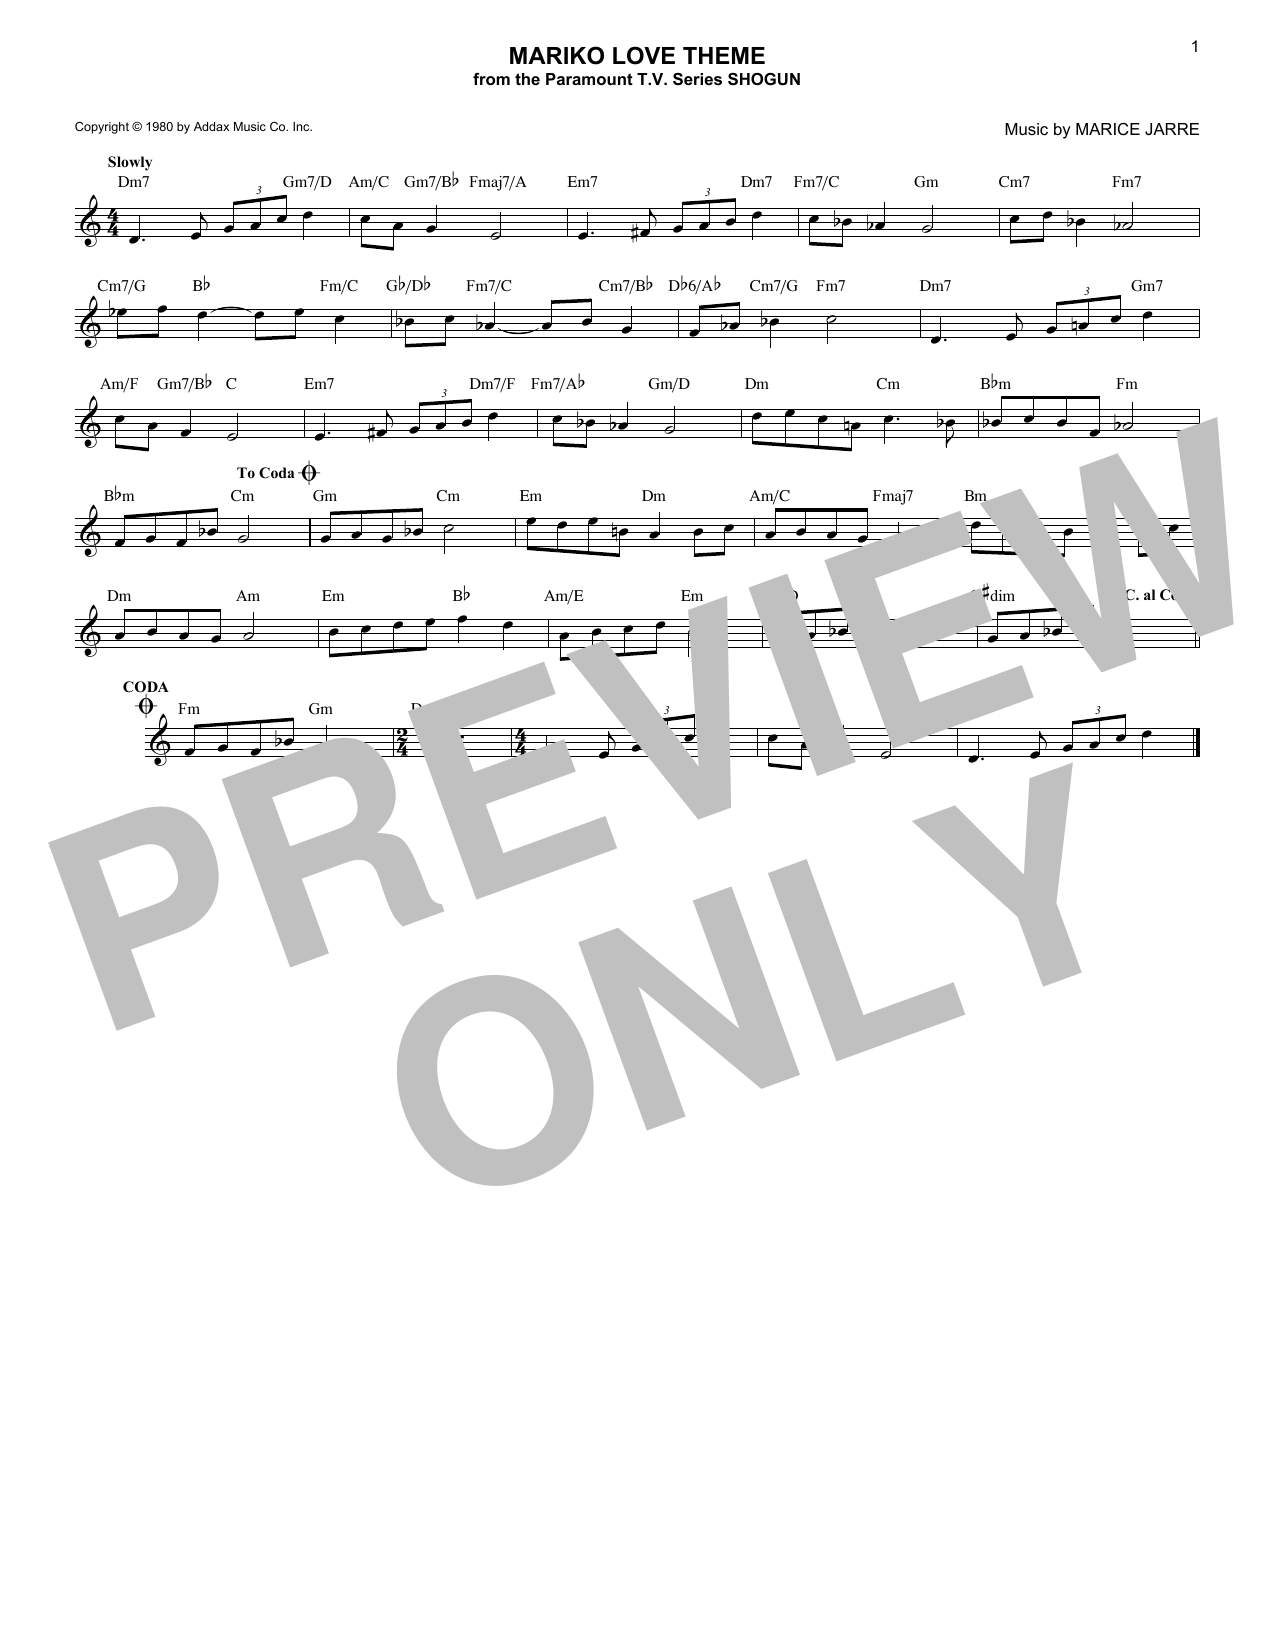 Maurice Jarre Mariko Love Theme Sheet Music Notes & Chords for Lead Sheet / Fake Book - Download or Print PDF